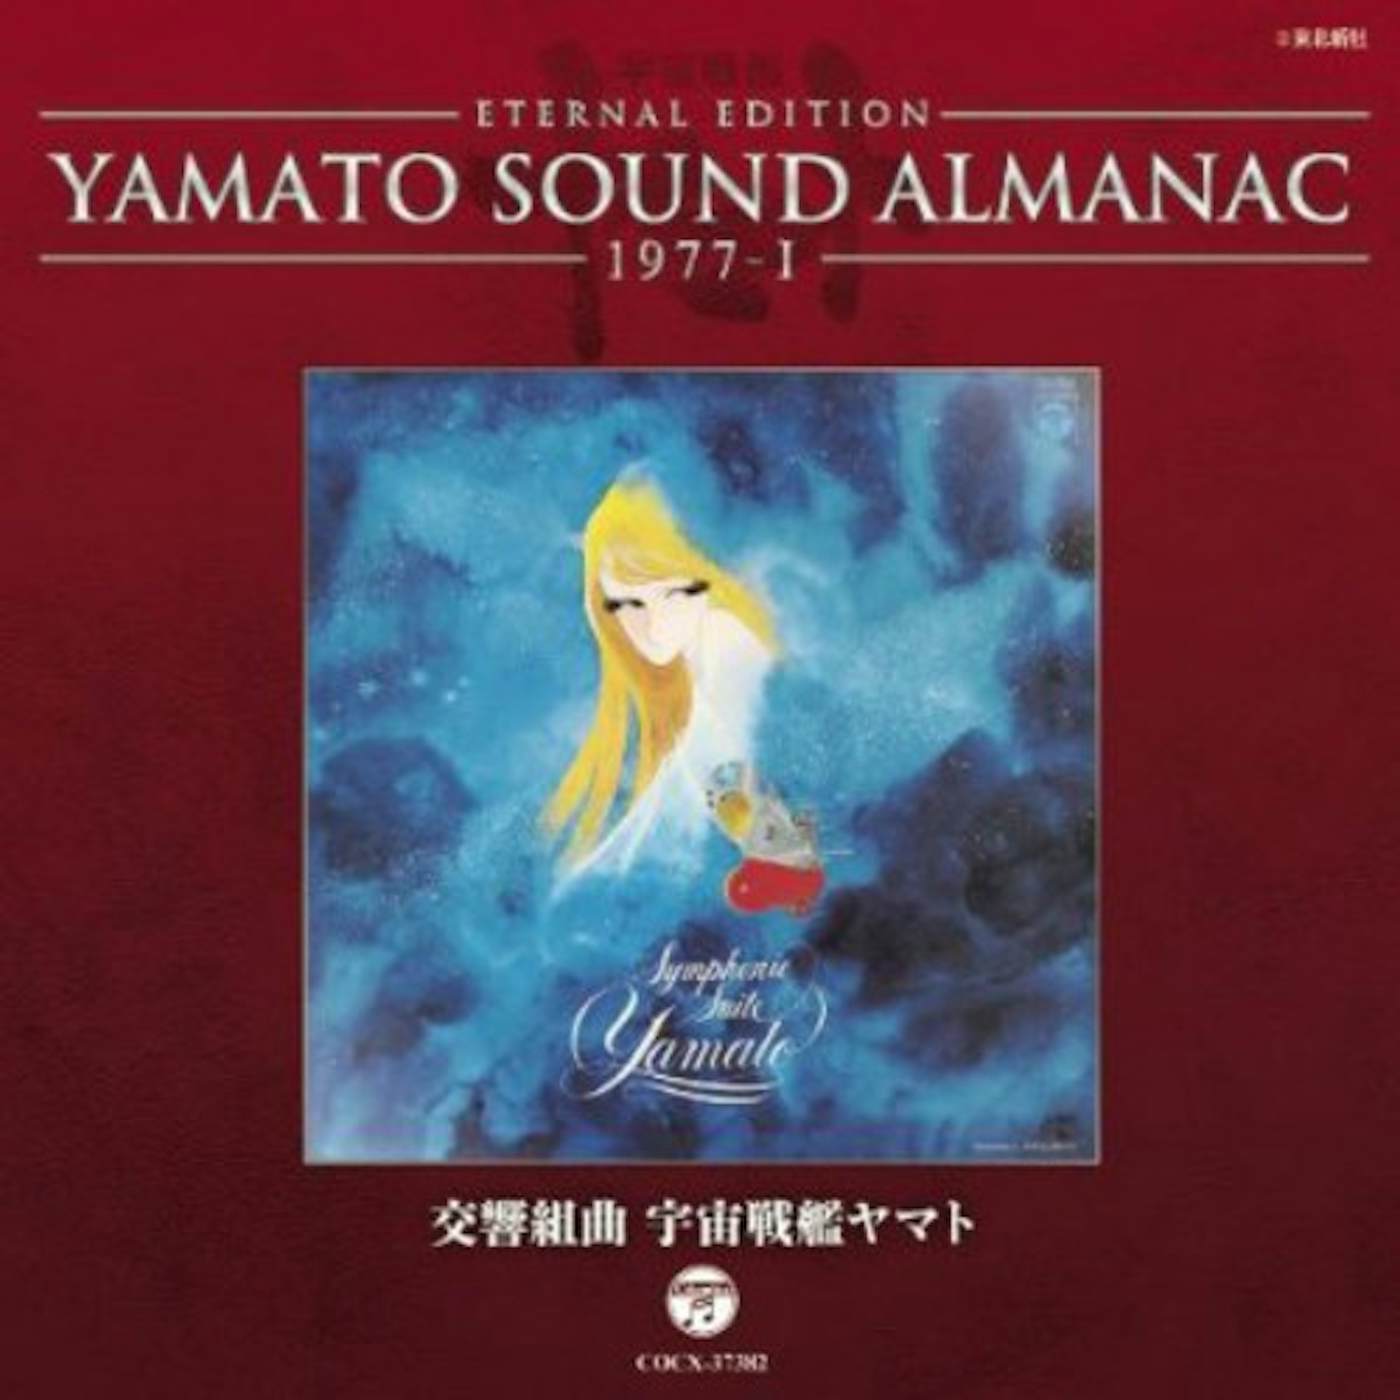 Animation ETERNAL EDITION YAMATO SOUND ALMANAC 1977-1 KOUKYO CD